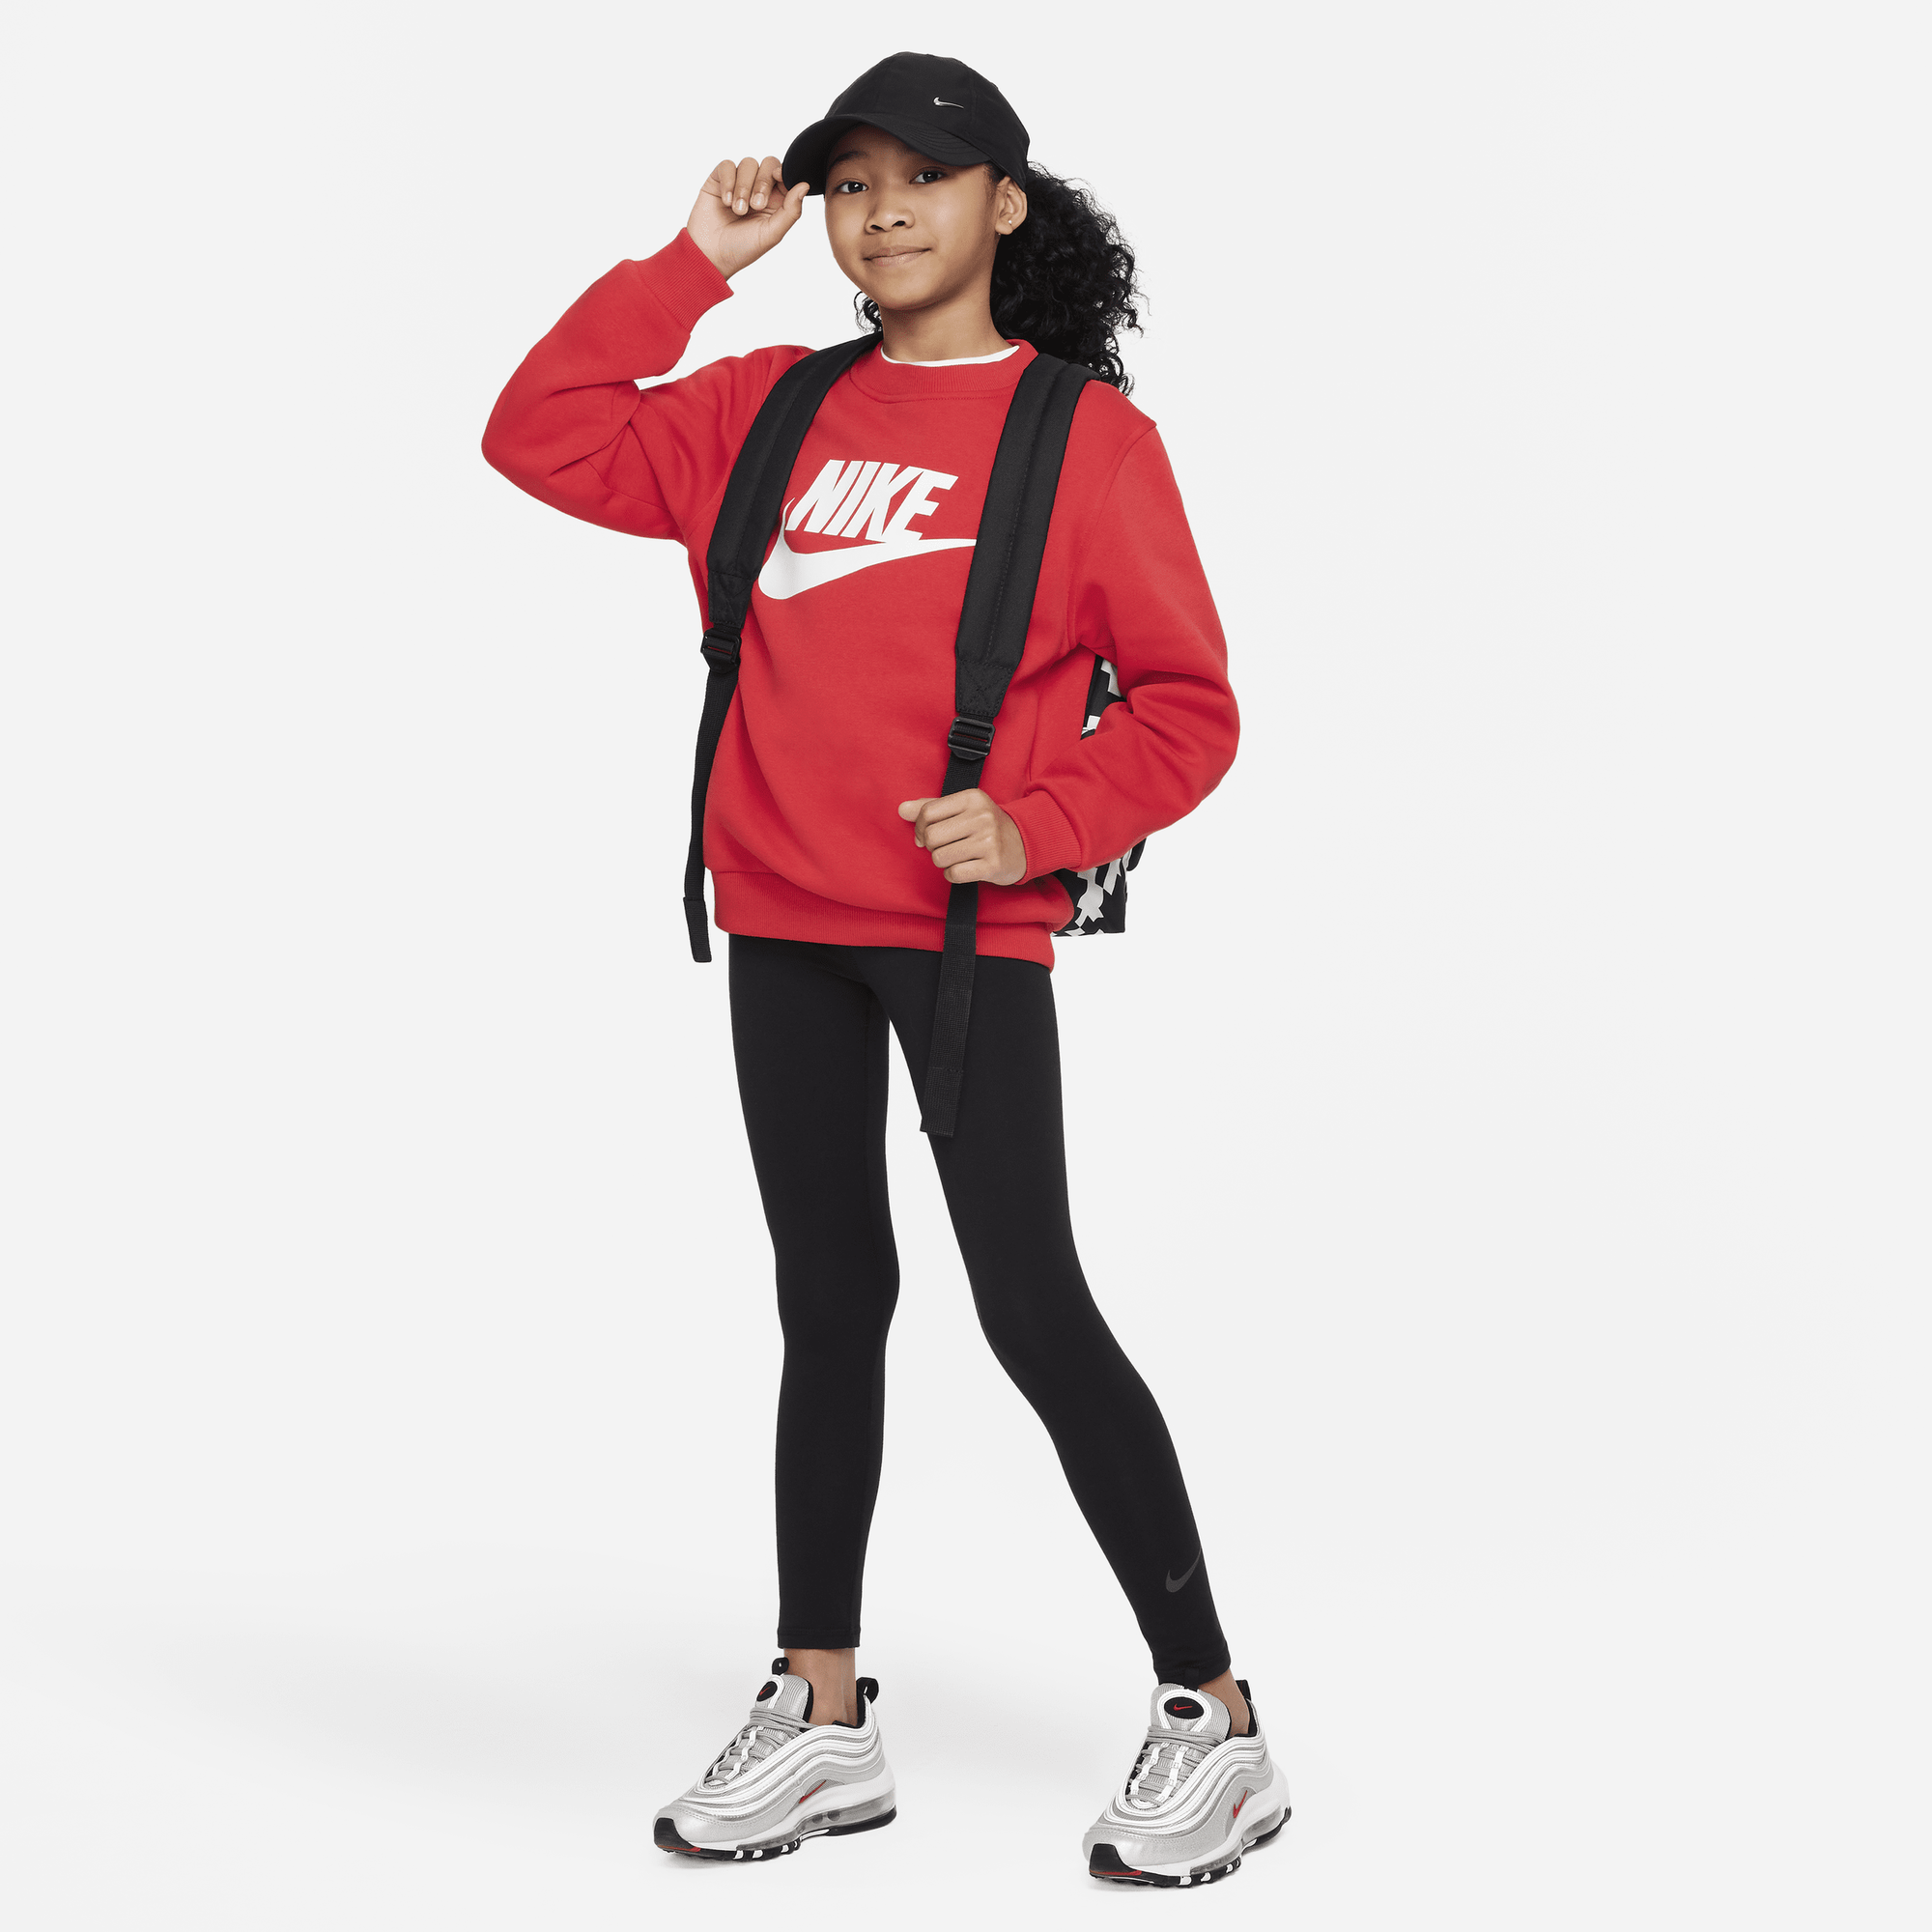 High-Waisted | Shop (Girls\') Kids\' Leggings Older Sportswear KSA Nike Favourites